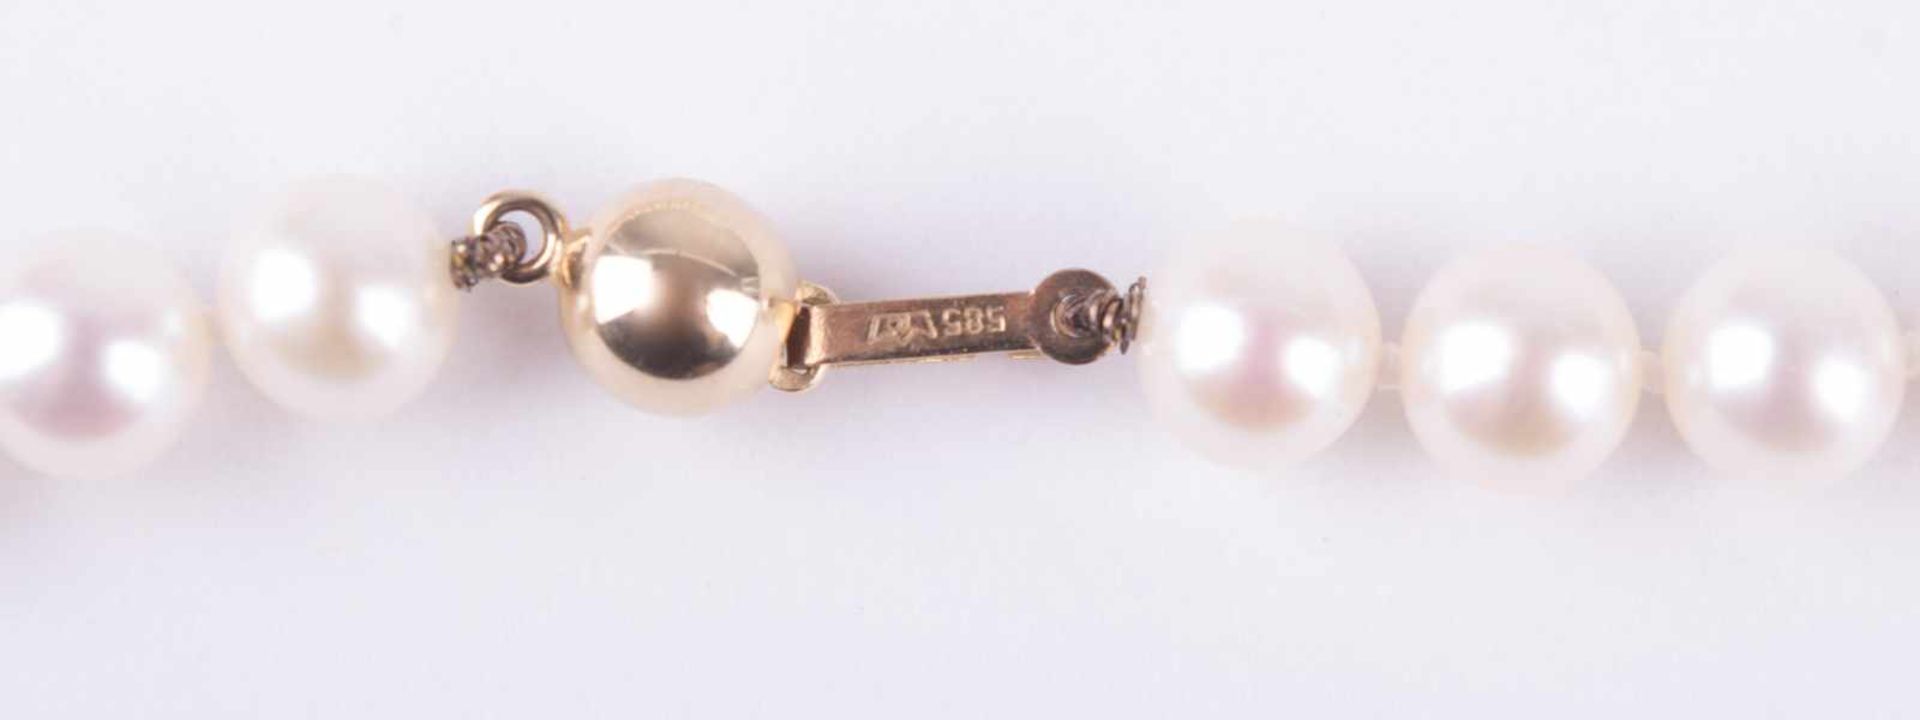 Perlenkette Verschluss GG 585/000, L: 42 cm, Pearl necklace clasp yellow gold 14 kt, lenght: 42 cm - Image 3 of 3